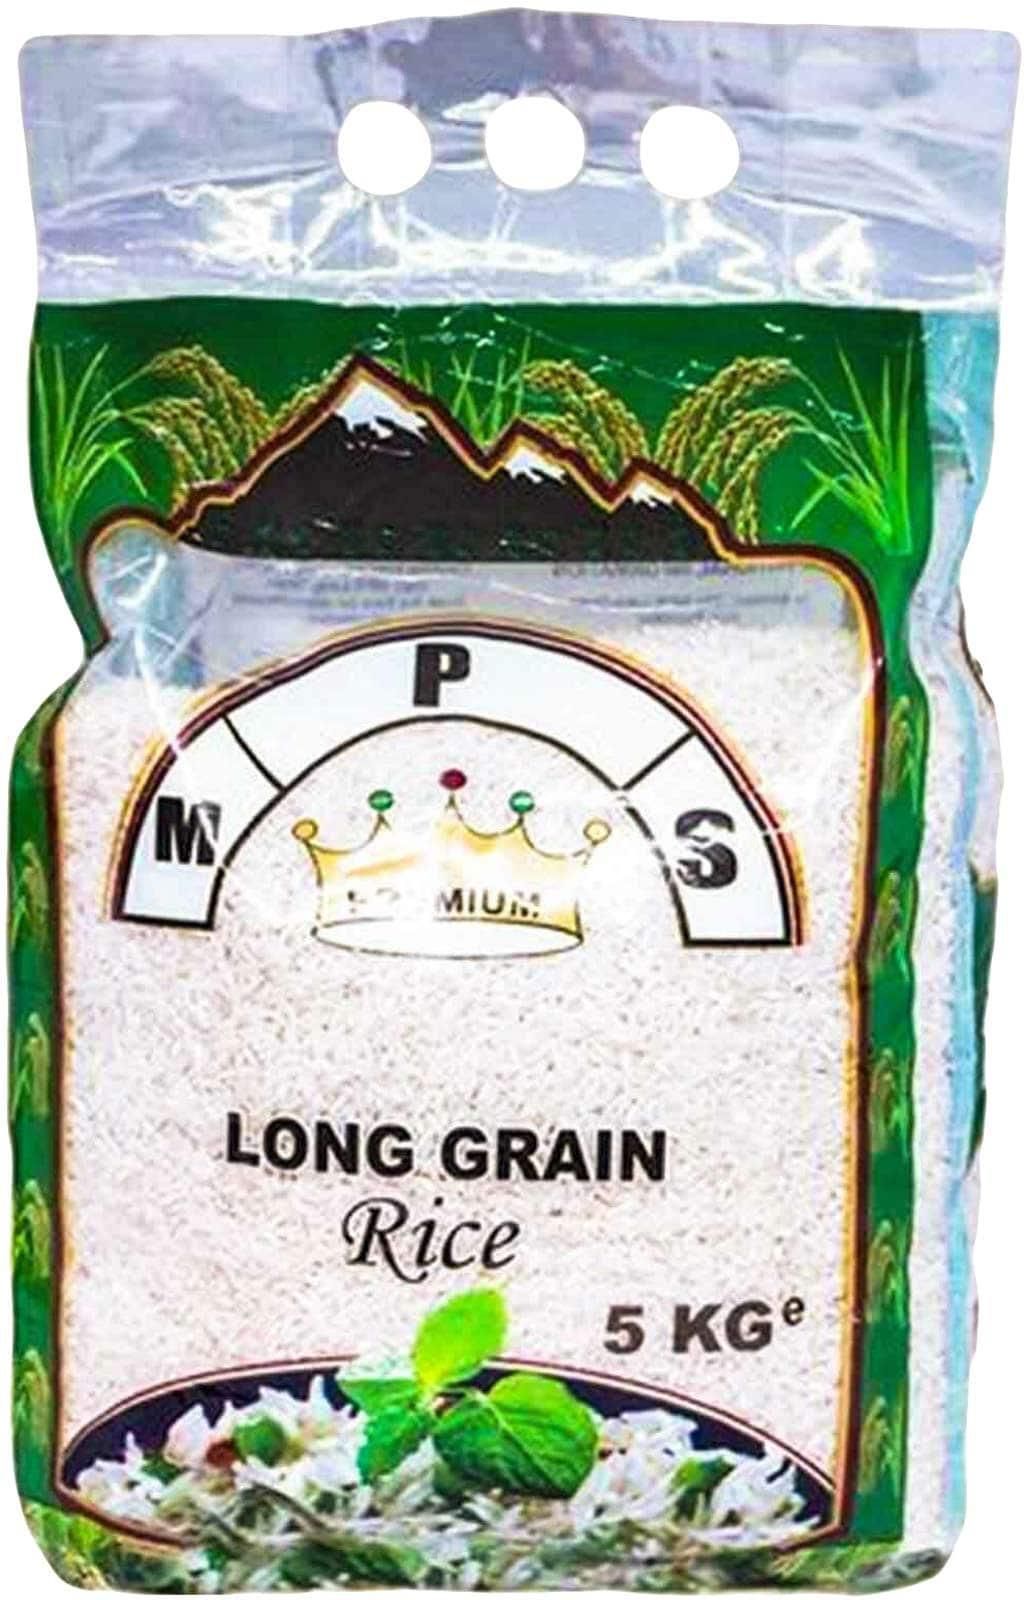 Kings M.P.S Long Grain Rice 5Kg